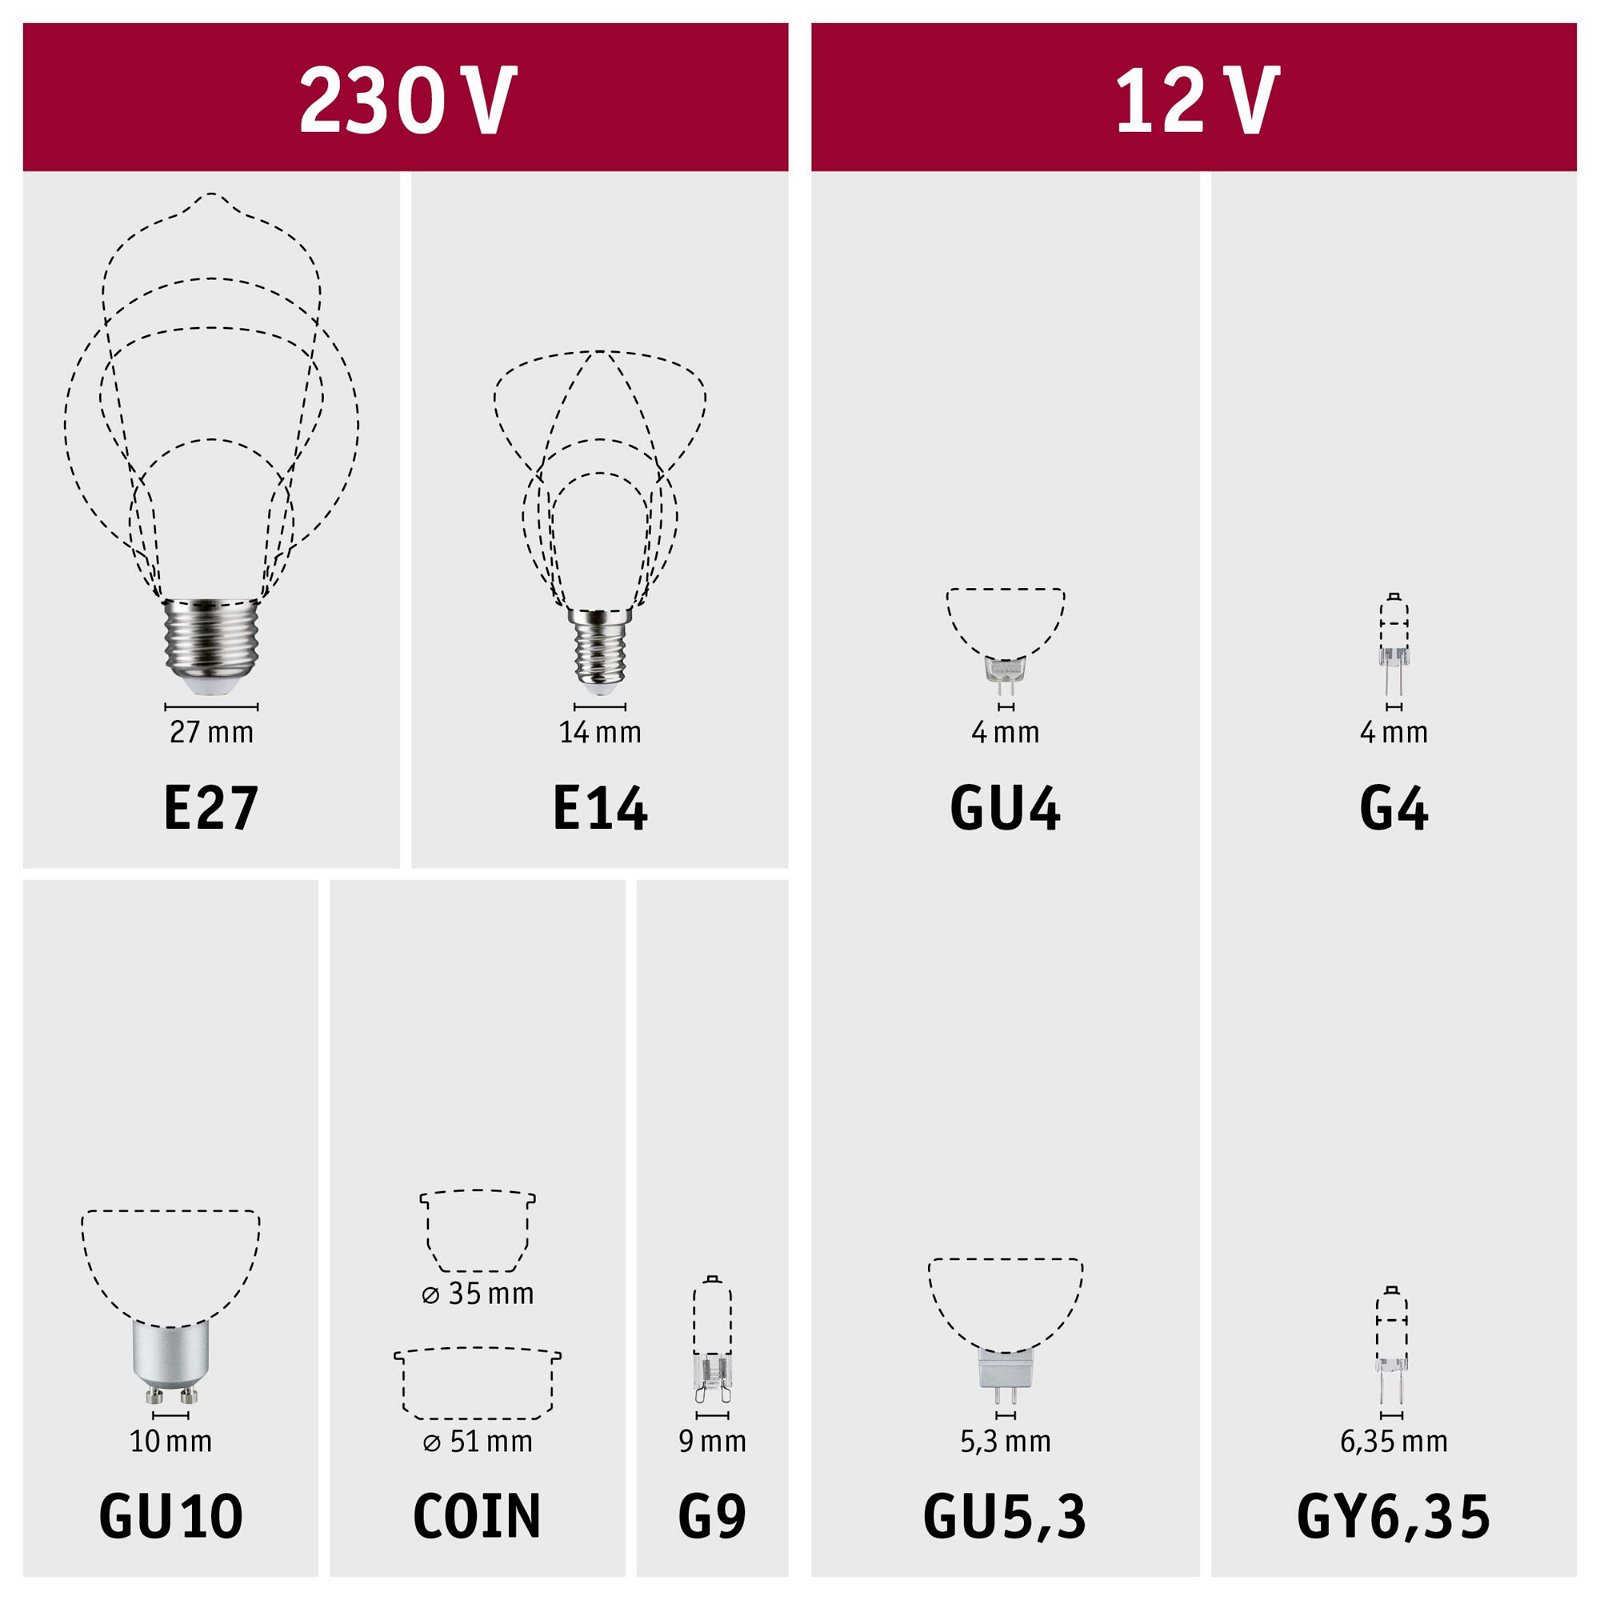 Filament 230V Smart Home Zigbee 3.0 LED Globe G95 E27 470lm 6,3W RGBW+ dimmbar Gold